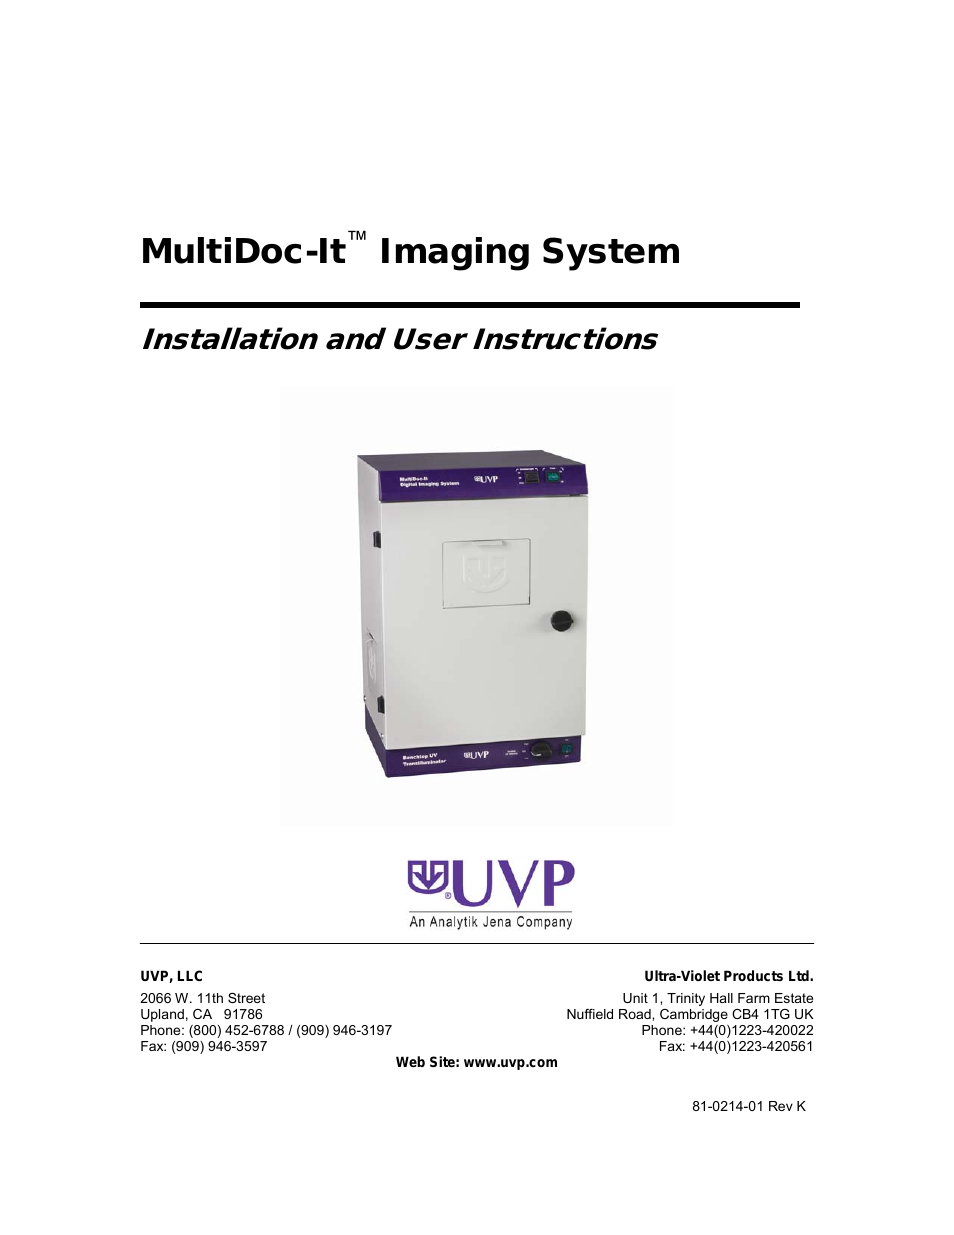 MultiDoc-It Imaging System